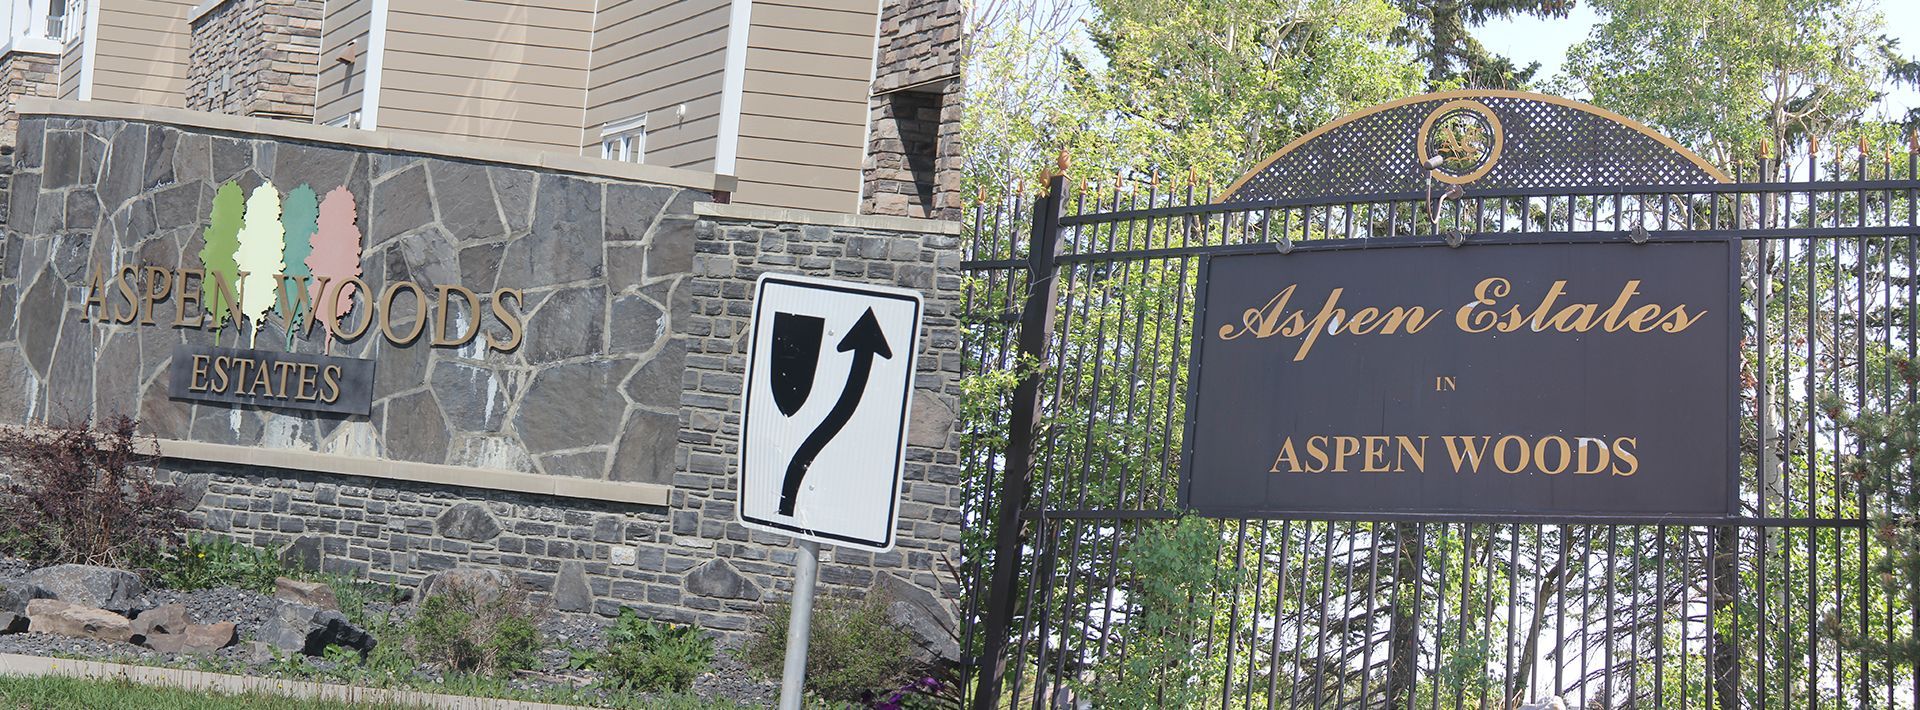 A sign that says aspen estates on it